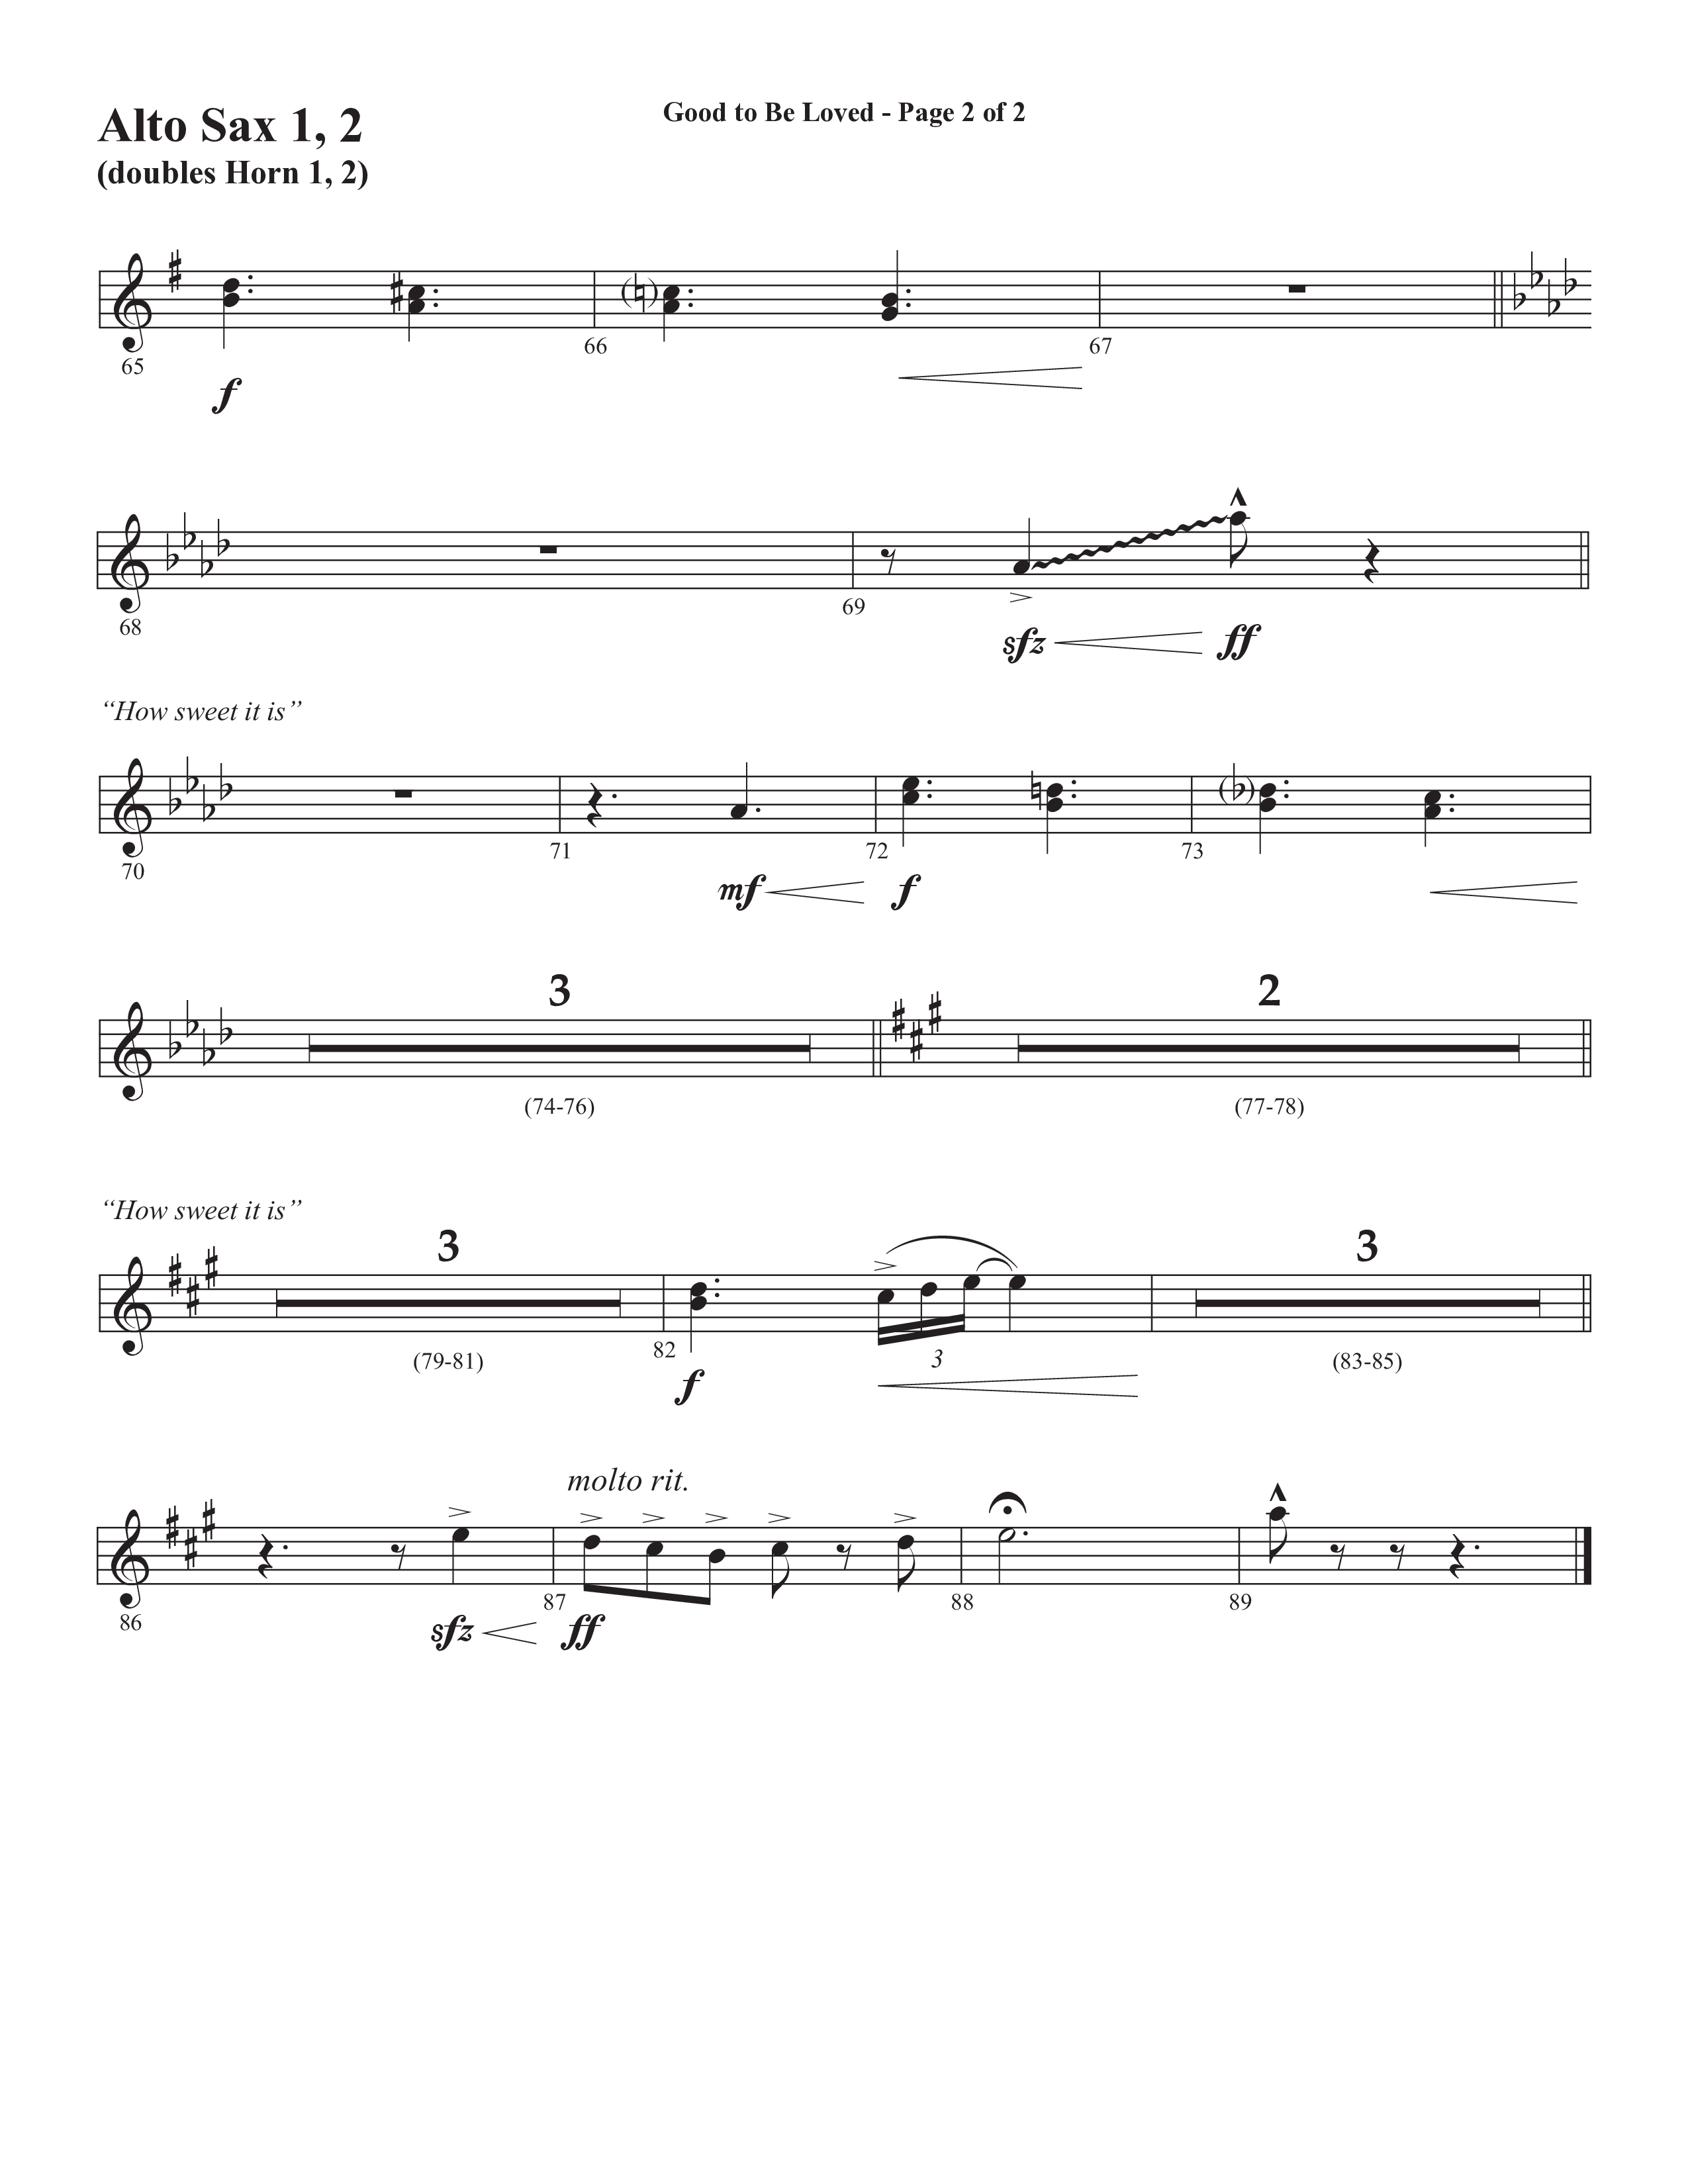 Good To Be Loved (Choral Anthem SATB) Alto Sax 1/2 (Semsen Music / Arr. Cliff Duren)